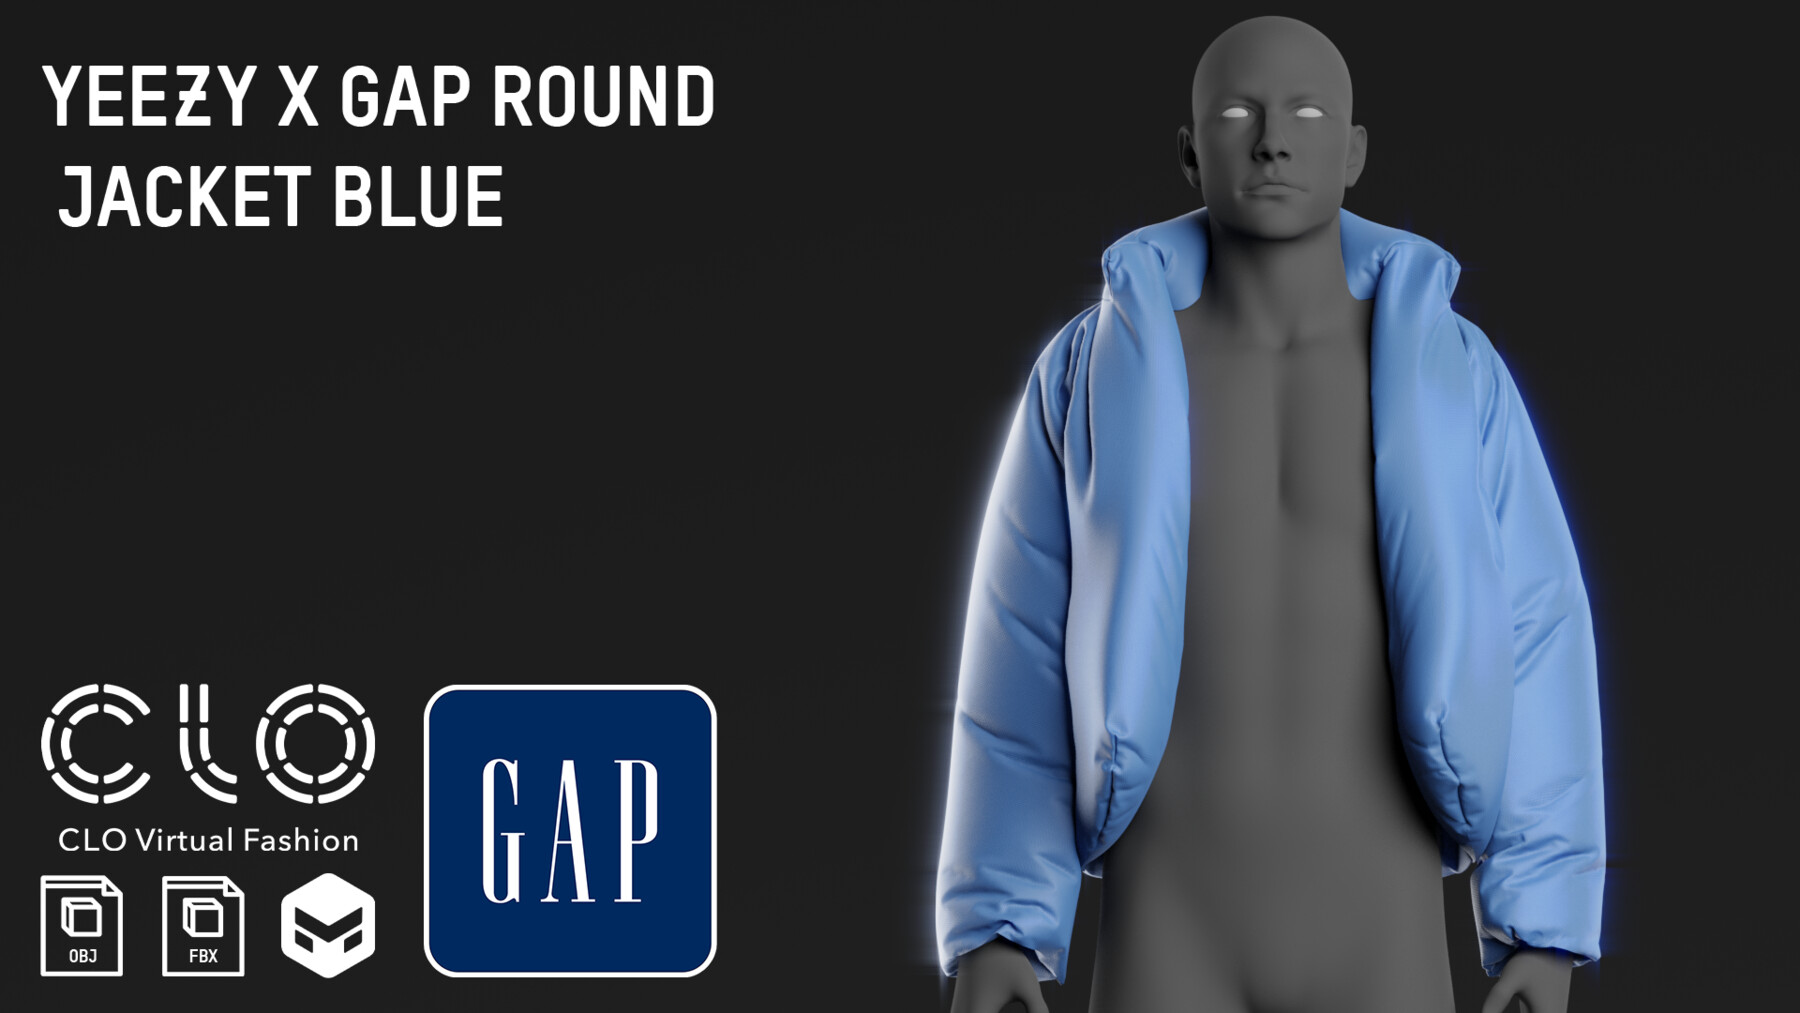 Yeezy gap round jacket blue